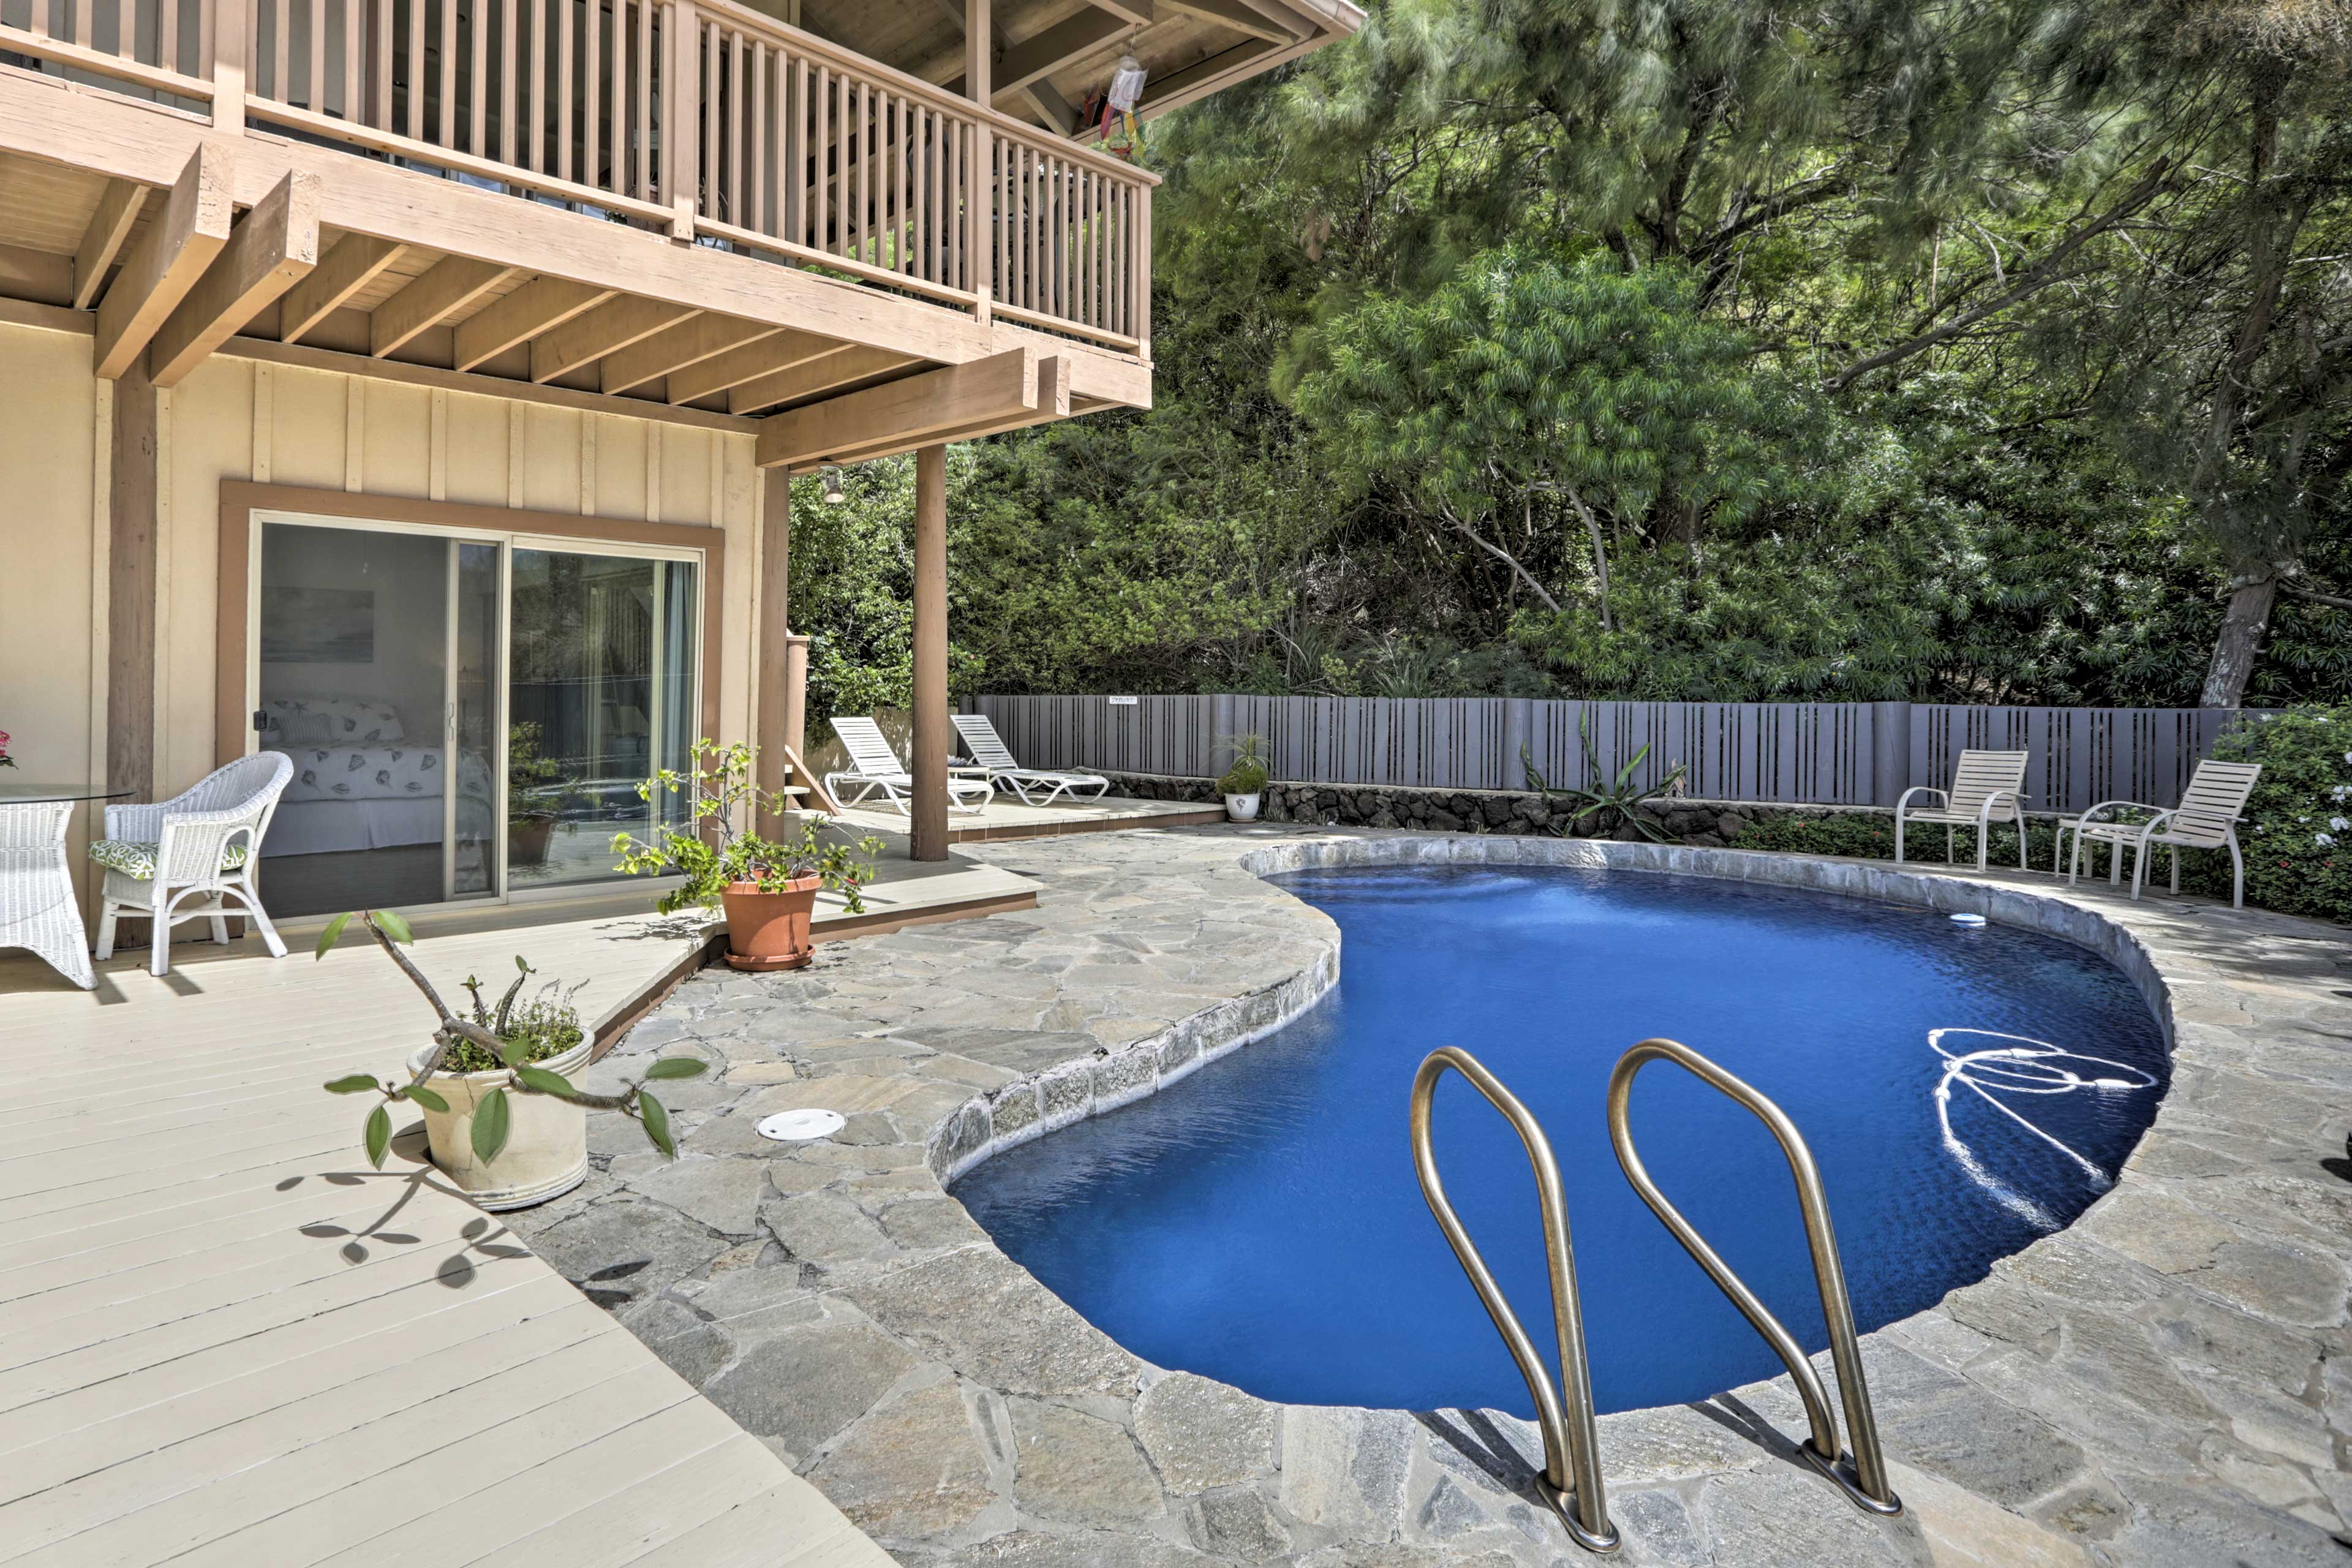 Enjoy access to a shared backyard pool.